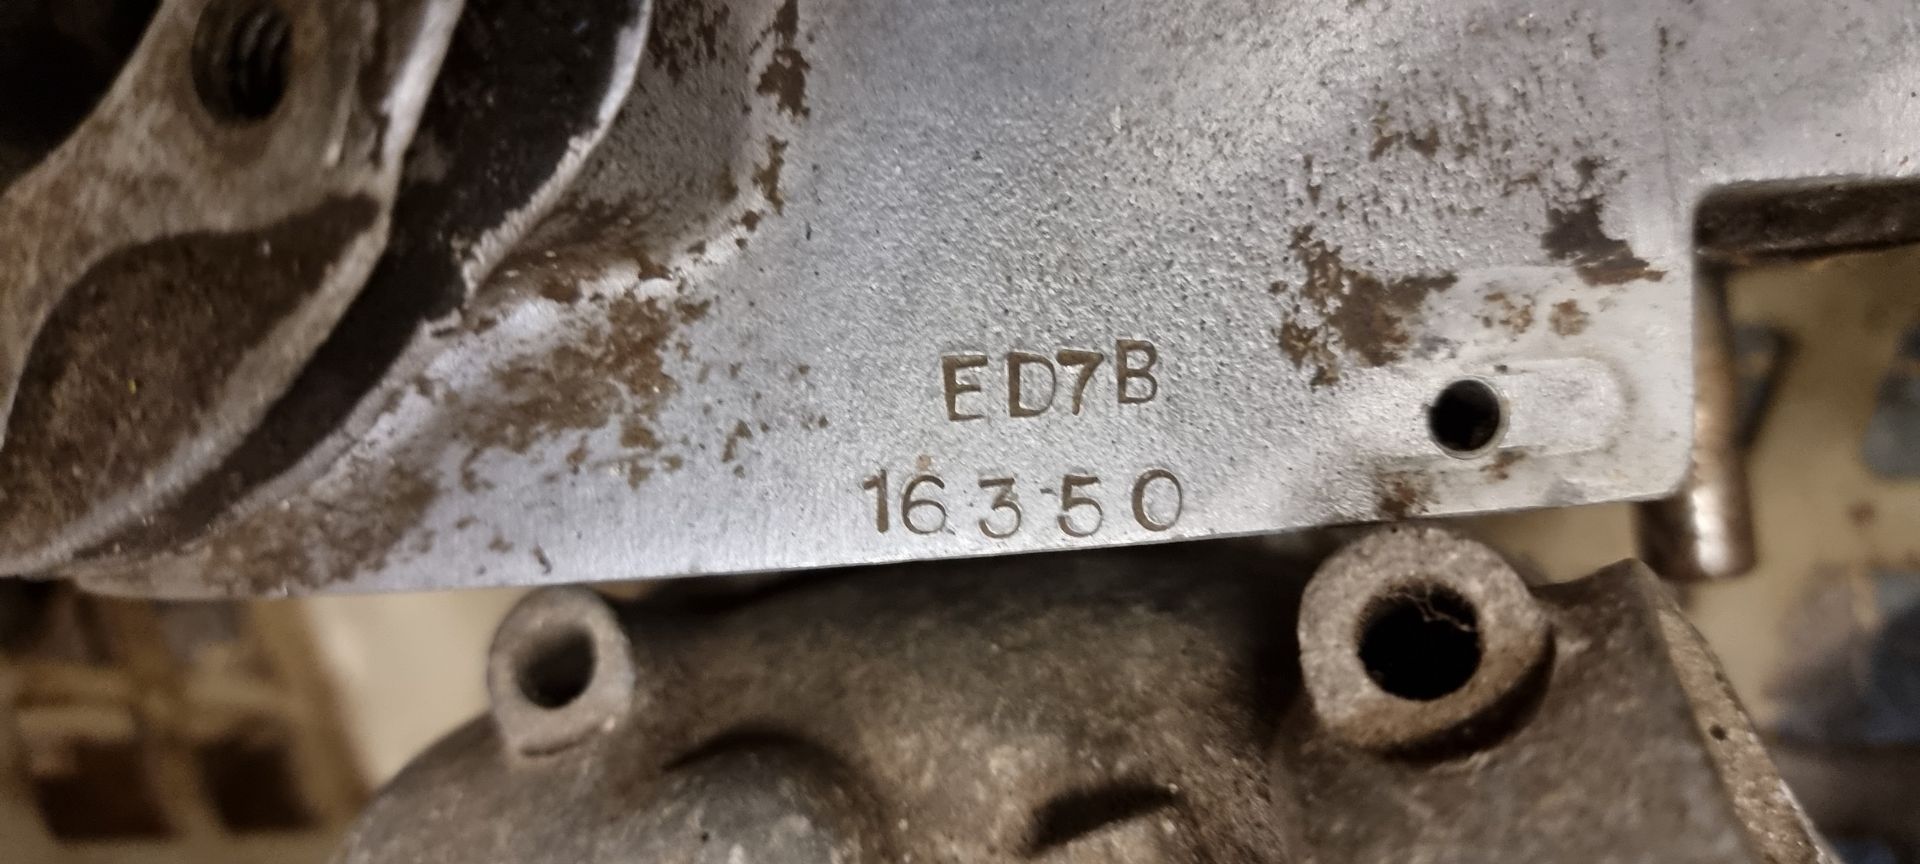 Three BSA Bantam crankcases, ED7B 16350, ED7B 2483, and FD7 408, two crankshafts and a cylinder - Image 2 of 4